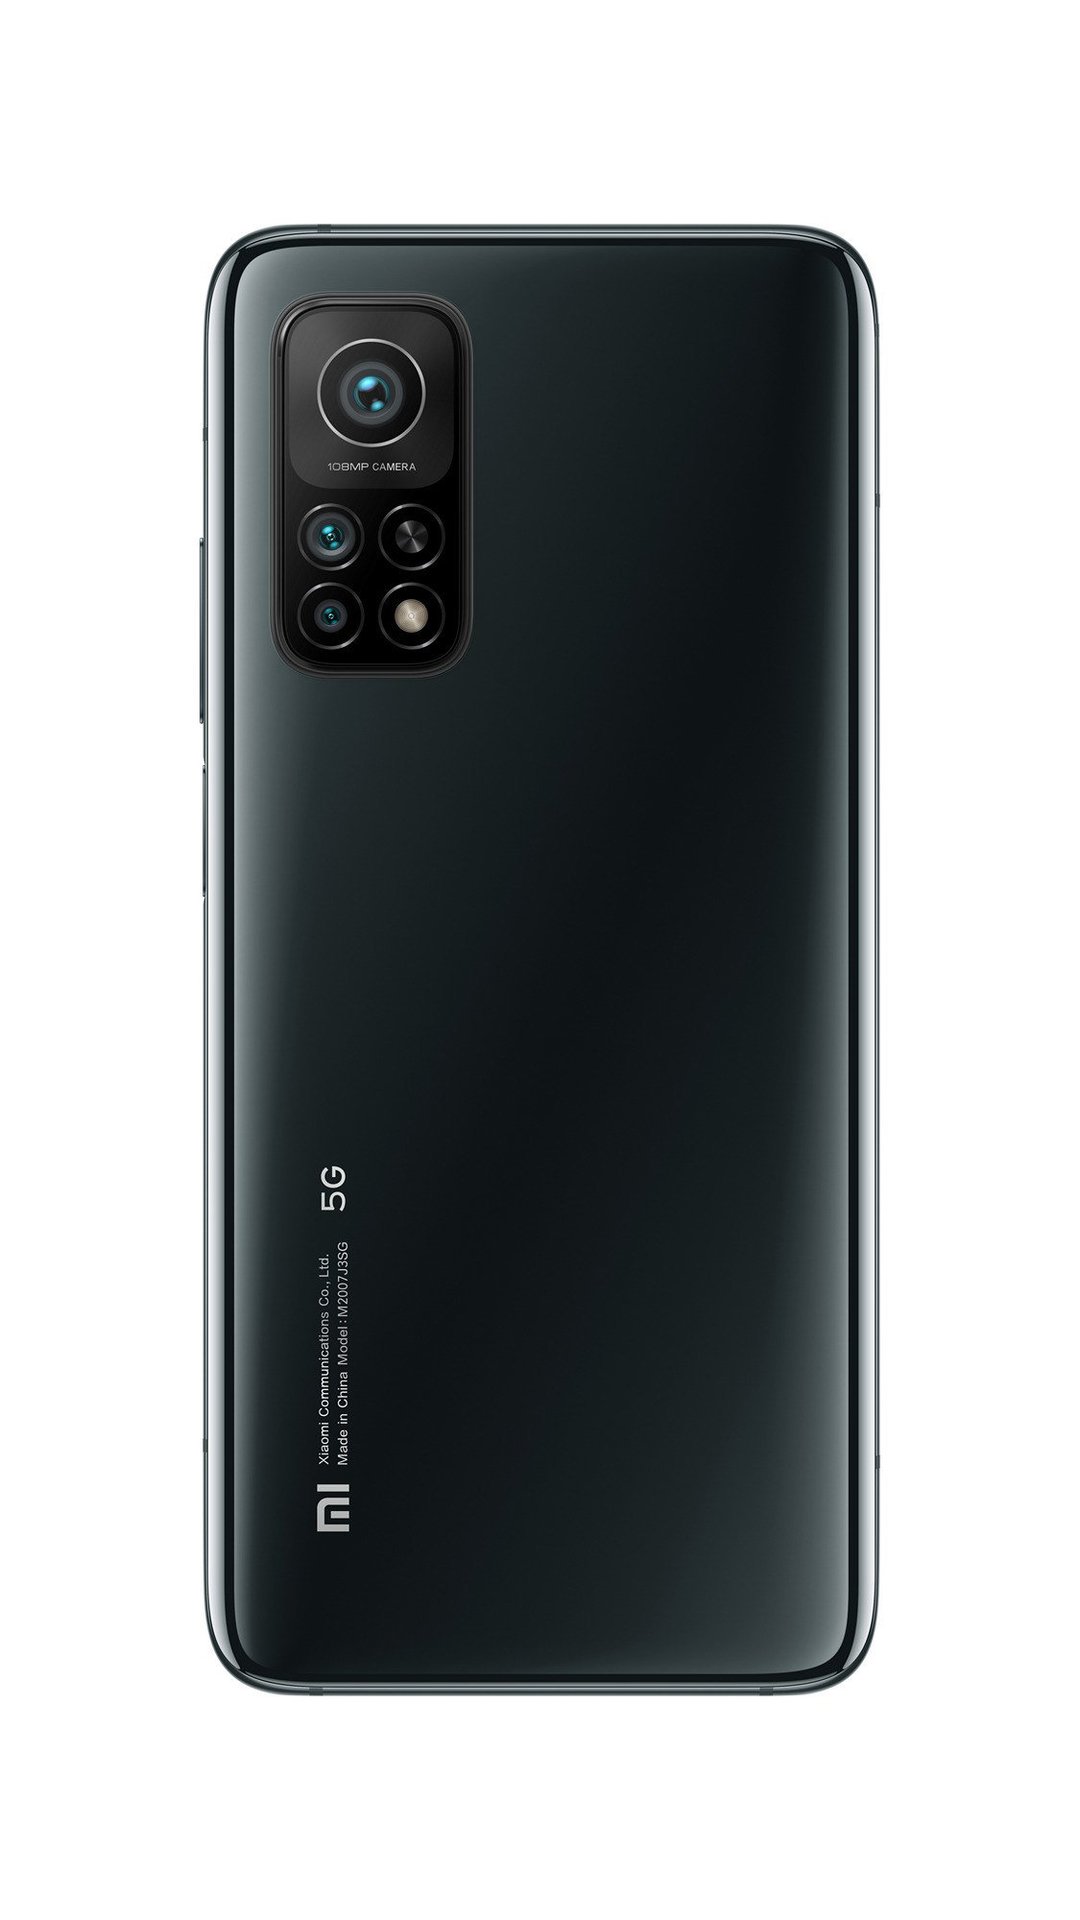 Xiaomi Mi 10T Pro render leak showing cameras